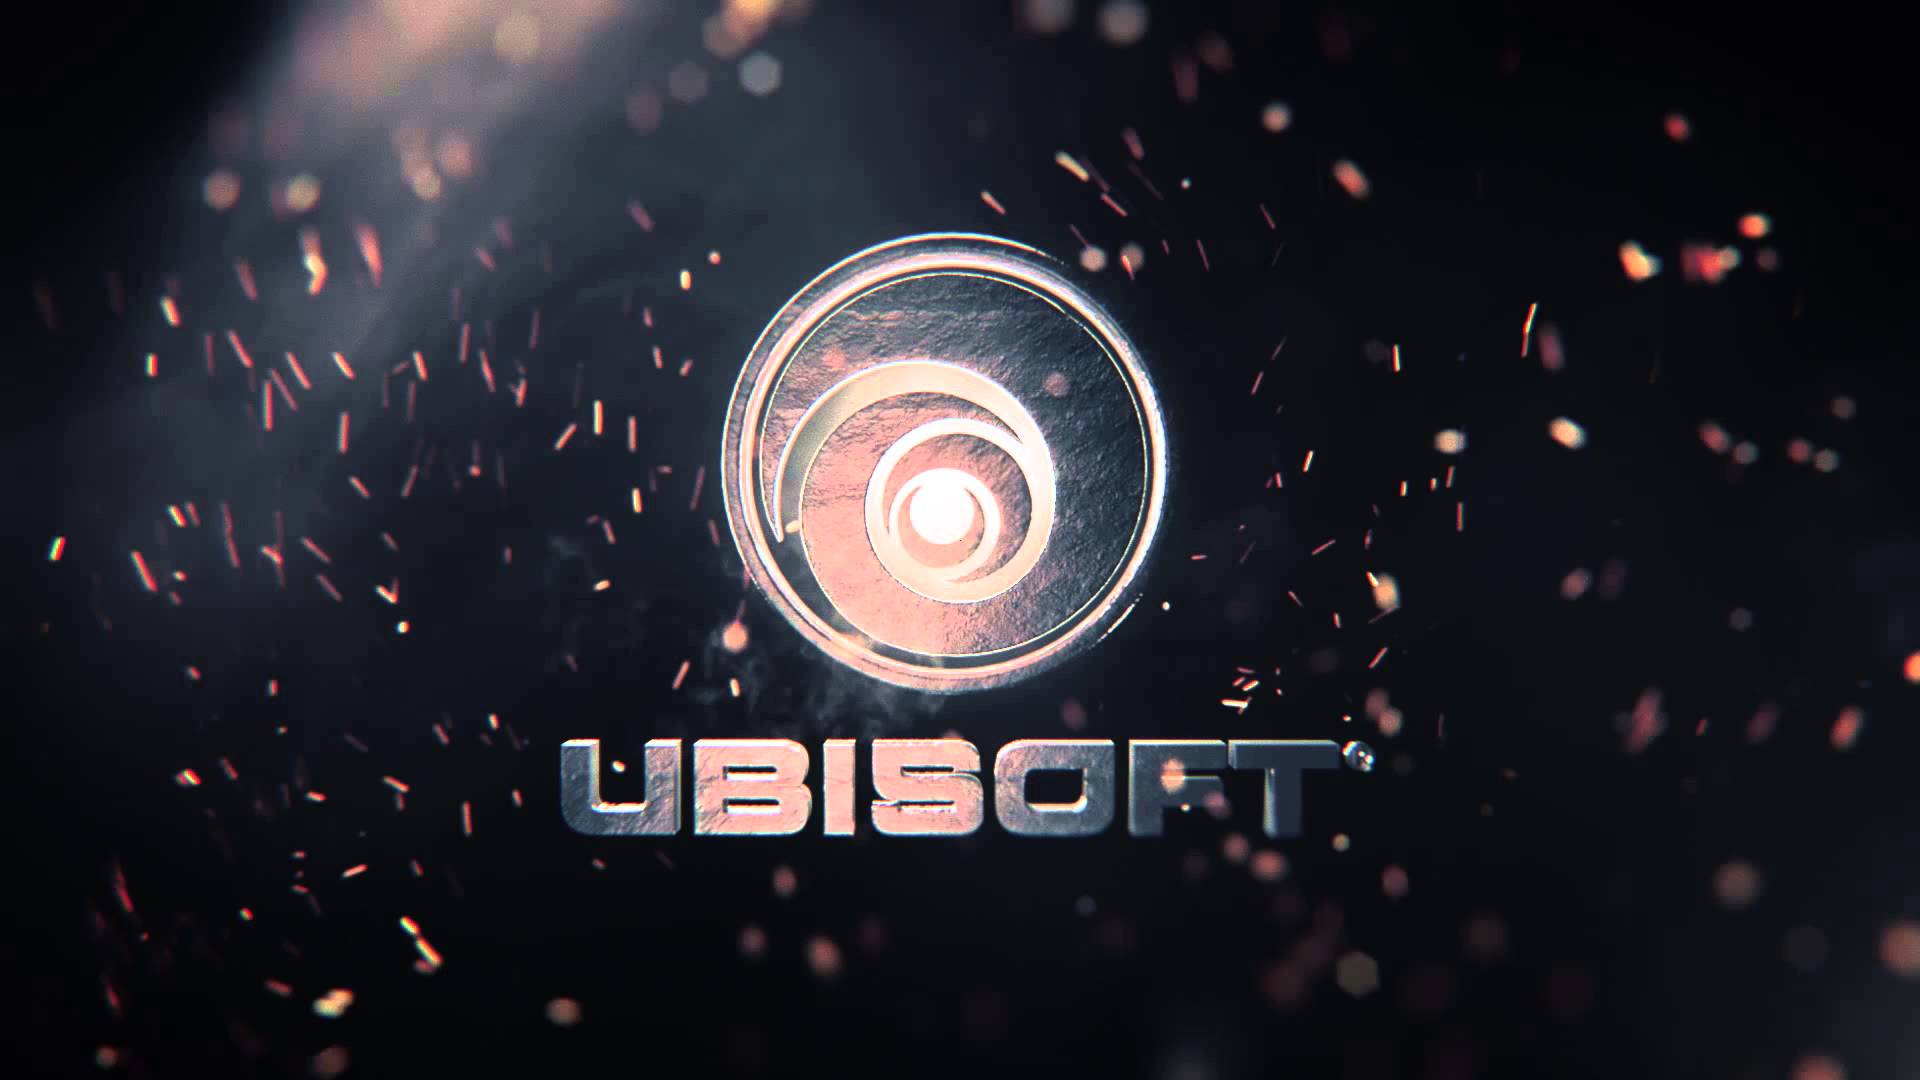 Ubisofti logo